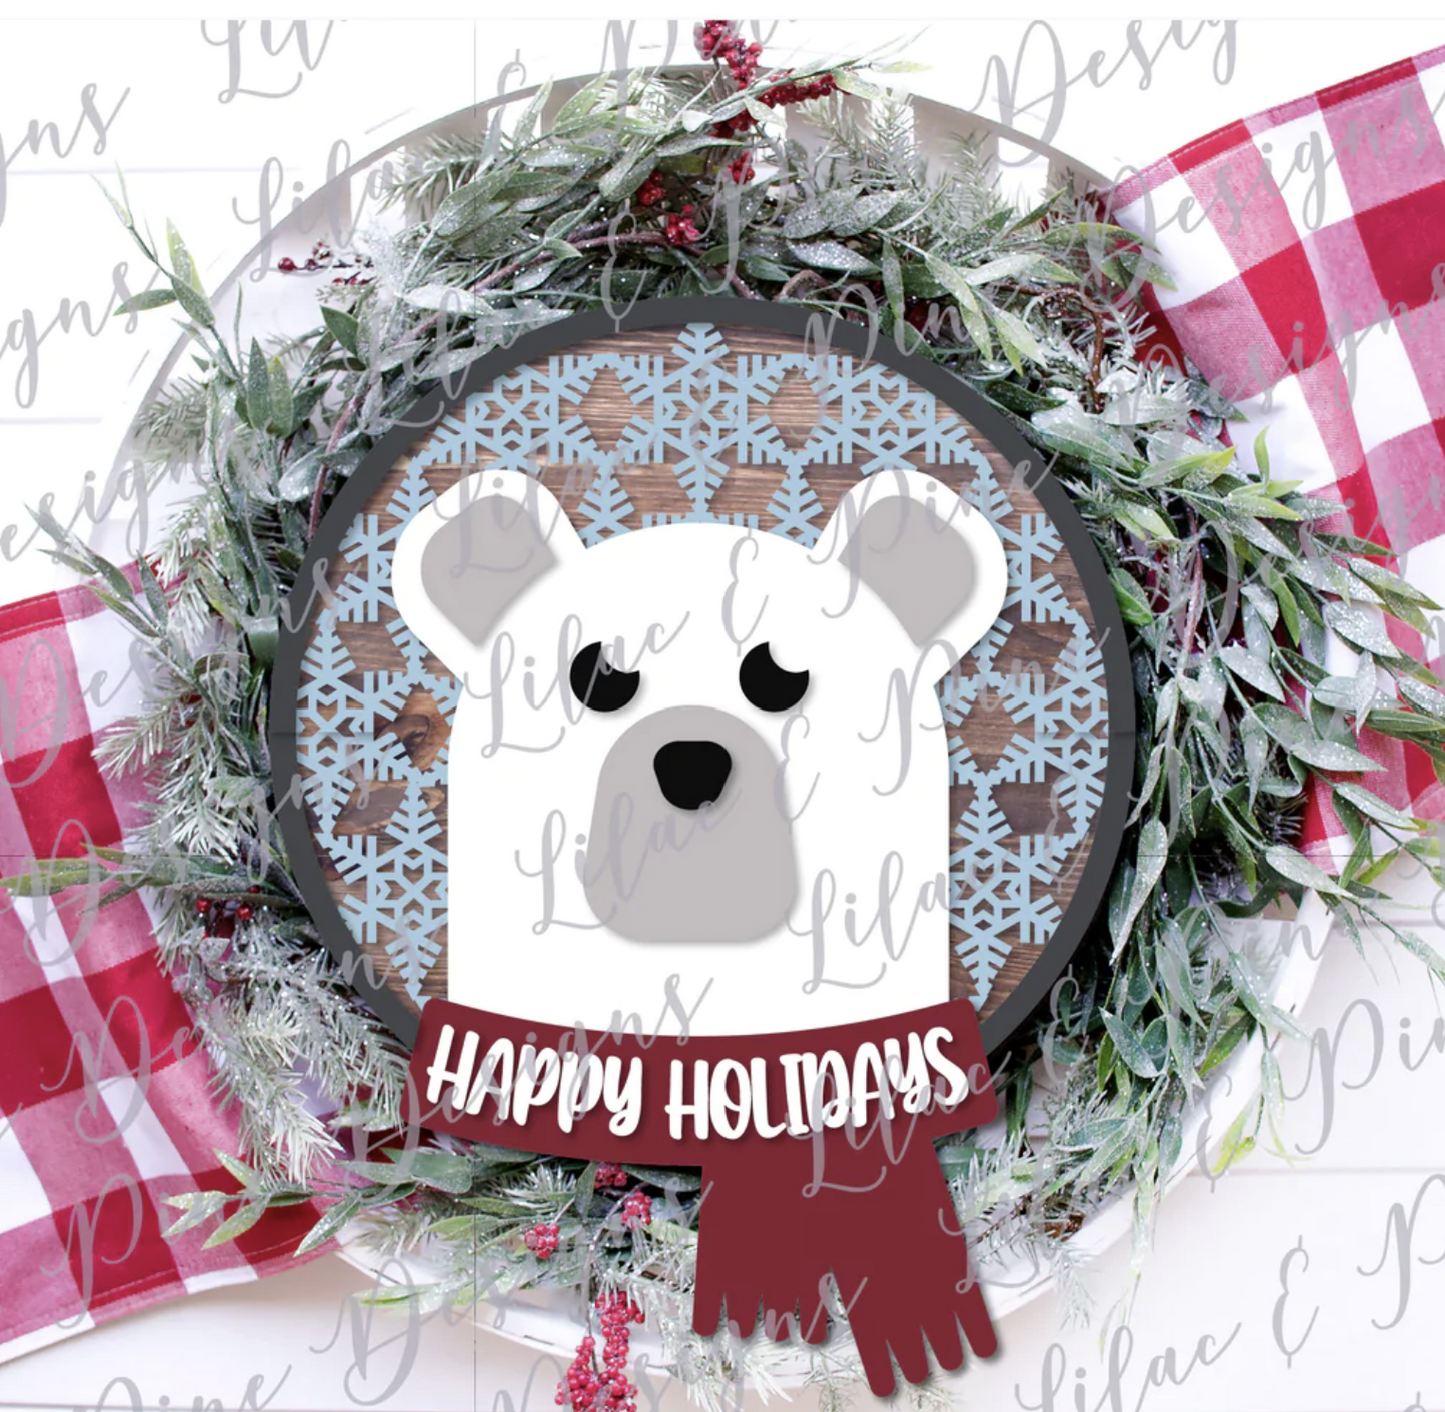 Happy Holidays with bear door sign